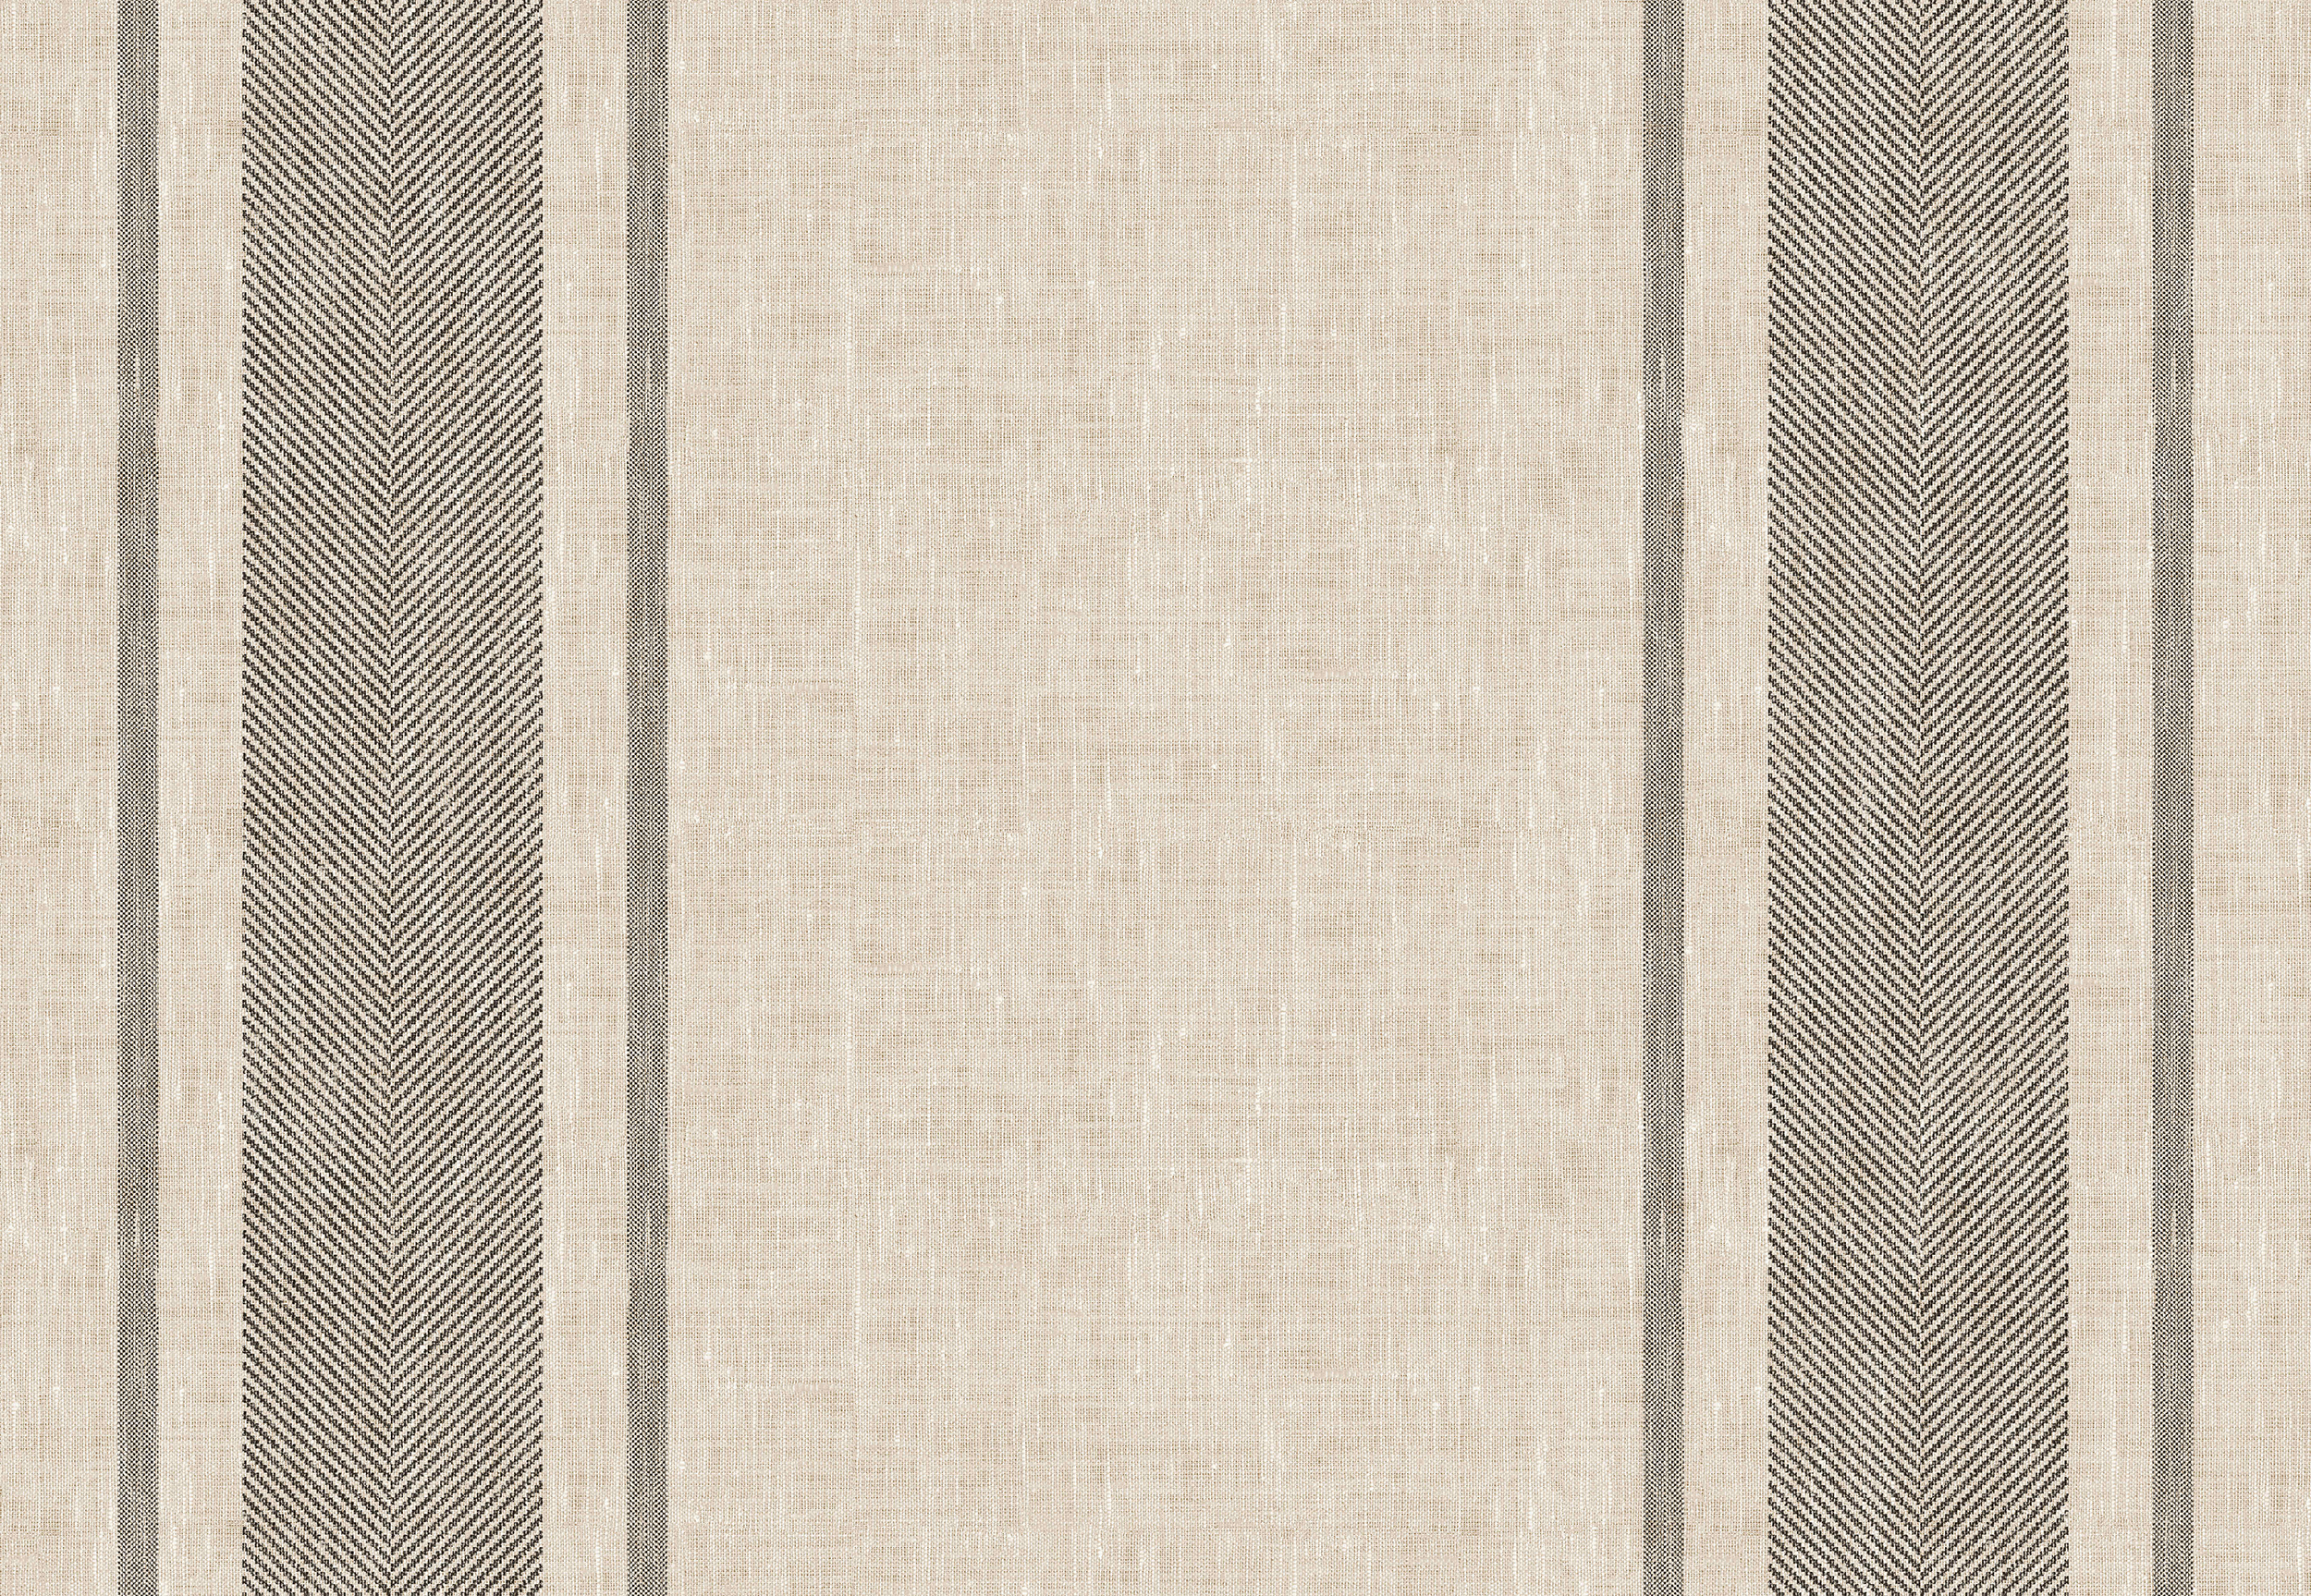 Towel Napkin flat-pack, 38 x 54 cm, Malia black